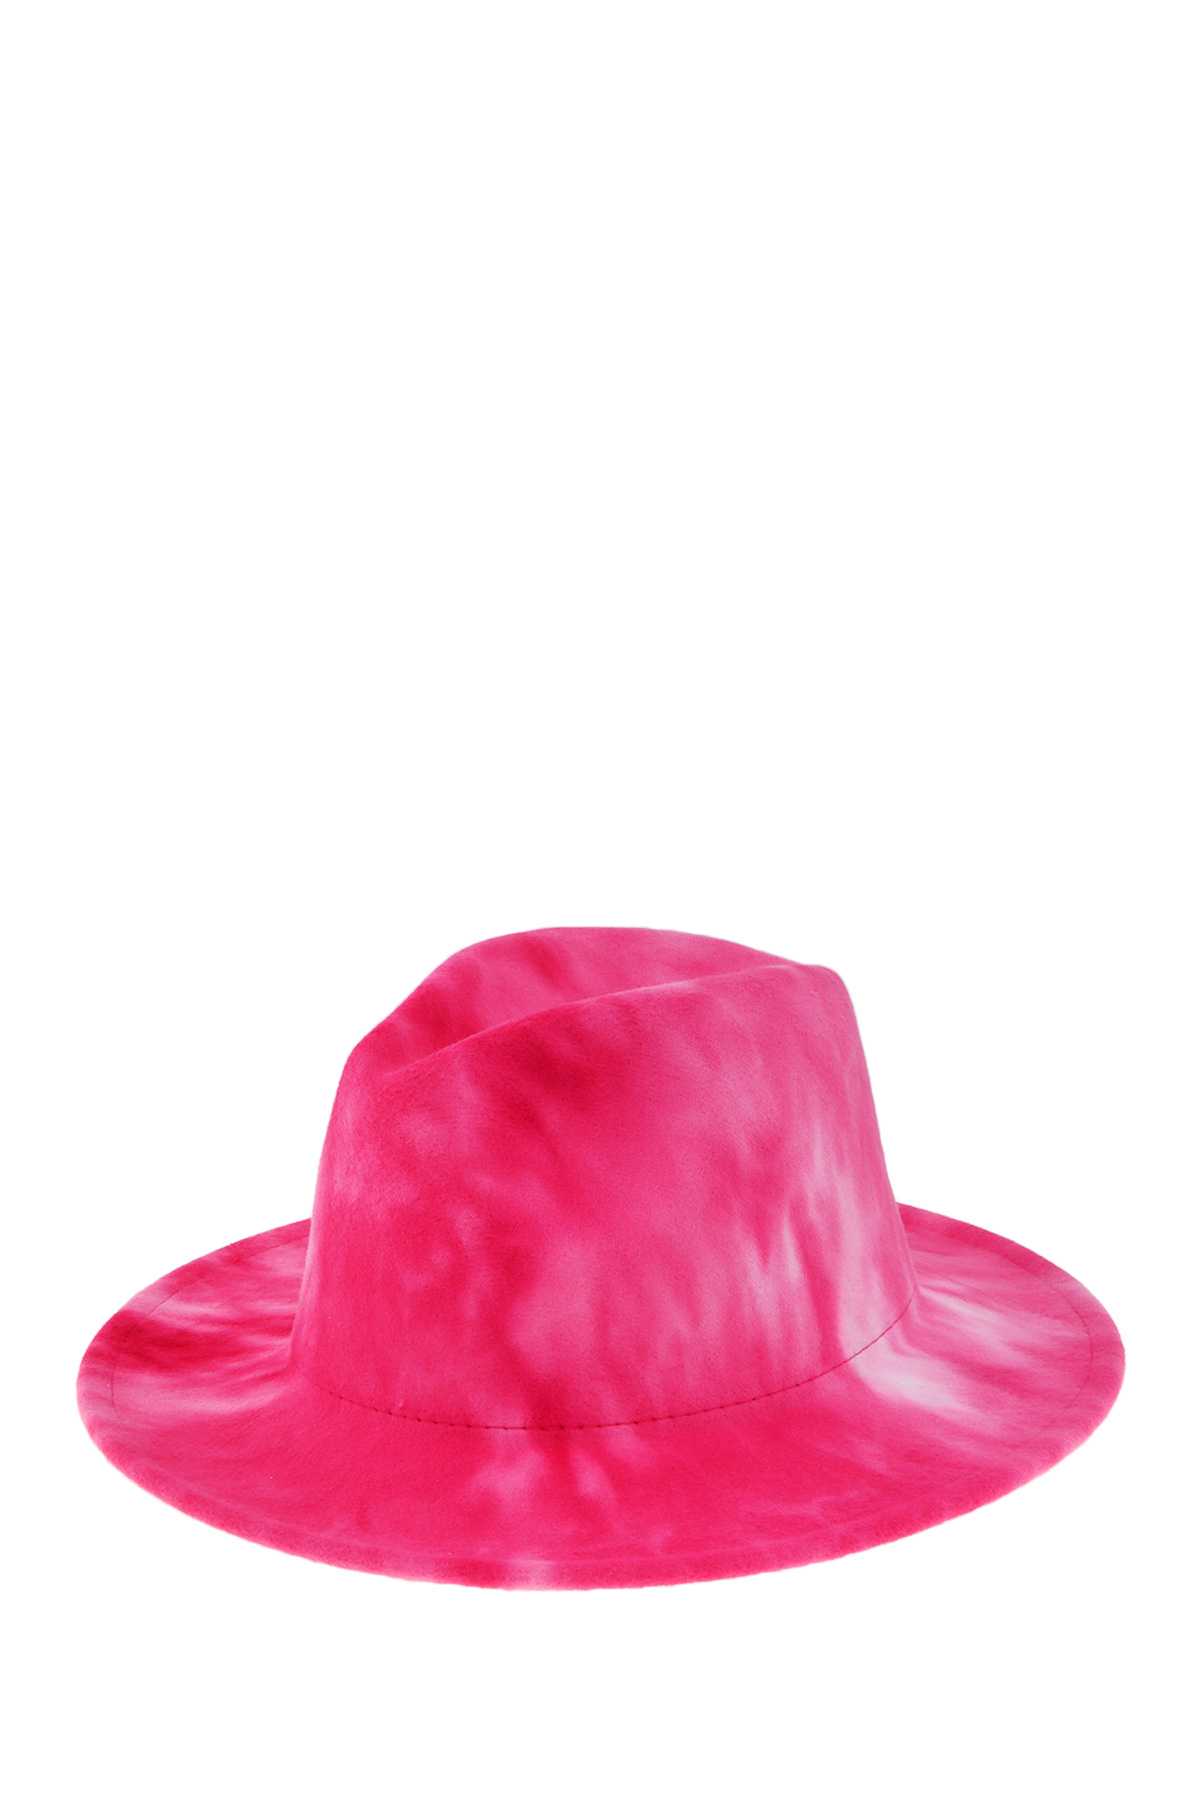 Tie Dye Print Fedora Felt Hat